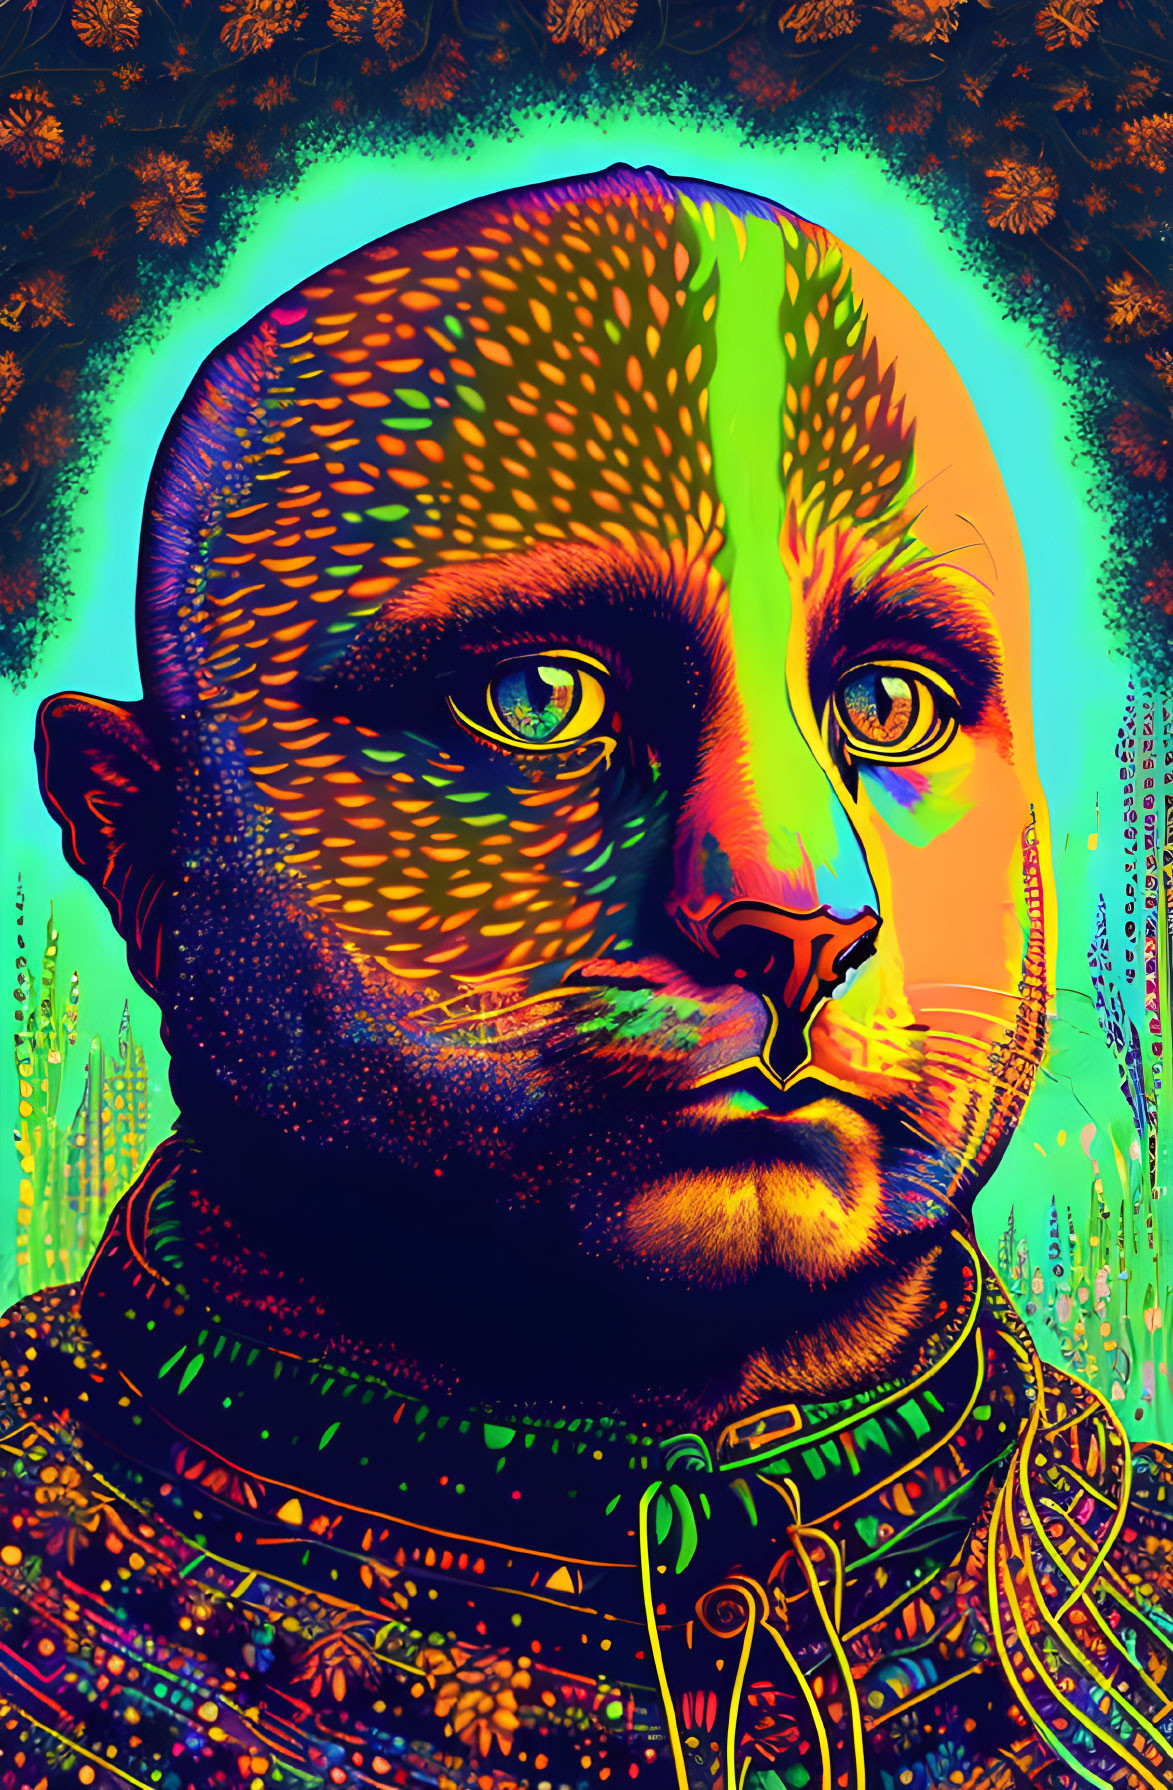 Psychedelic Cat-Man